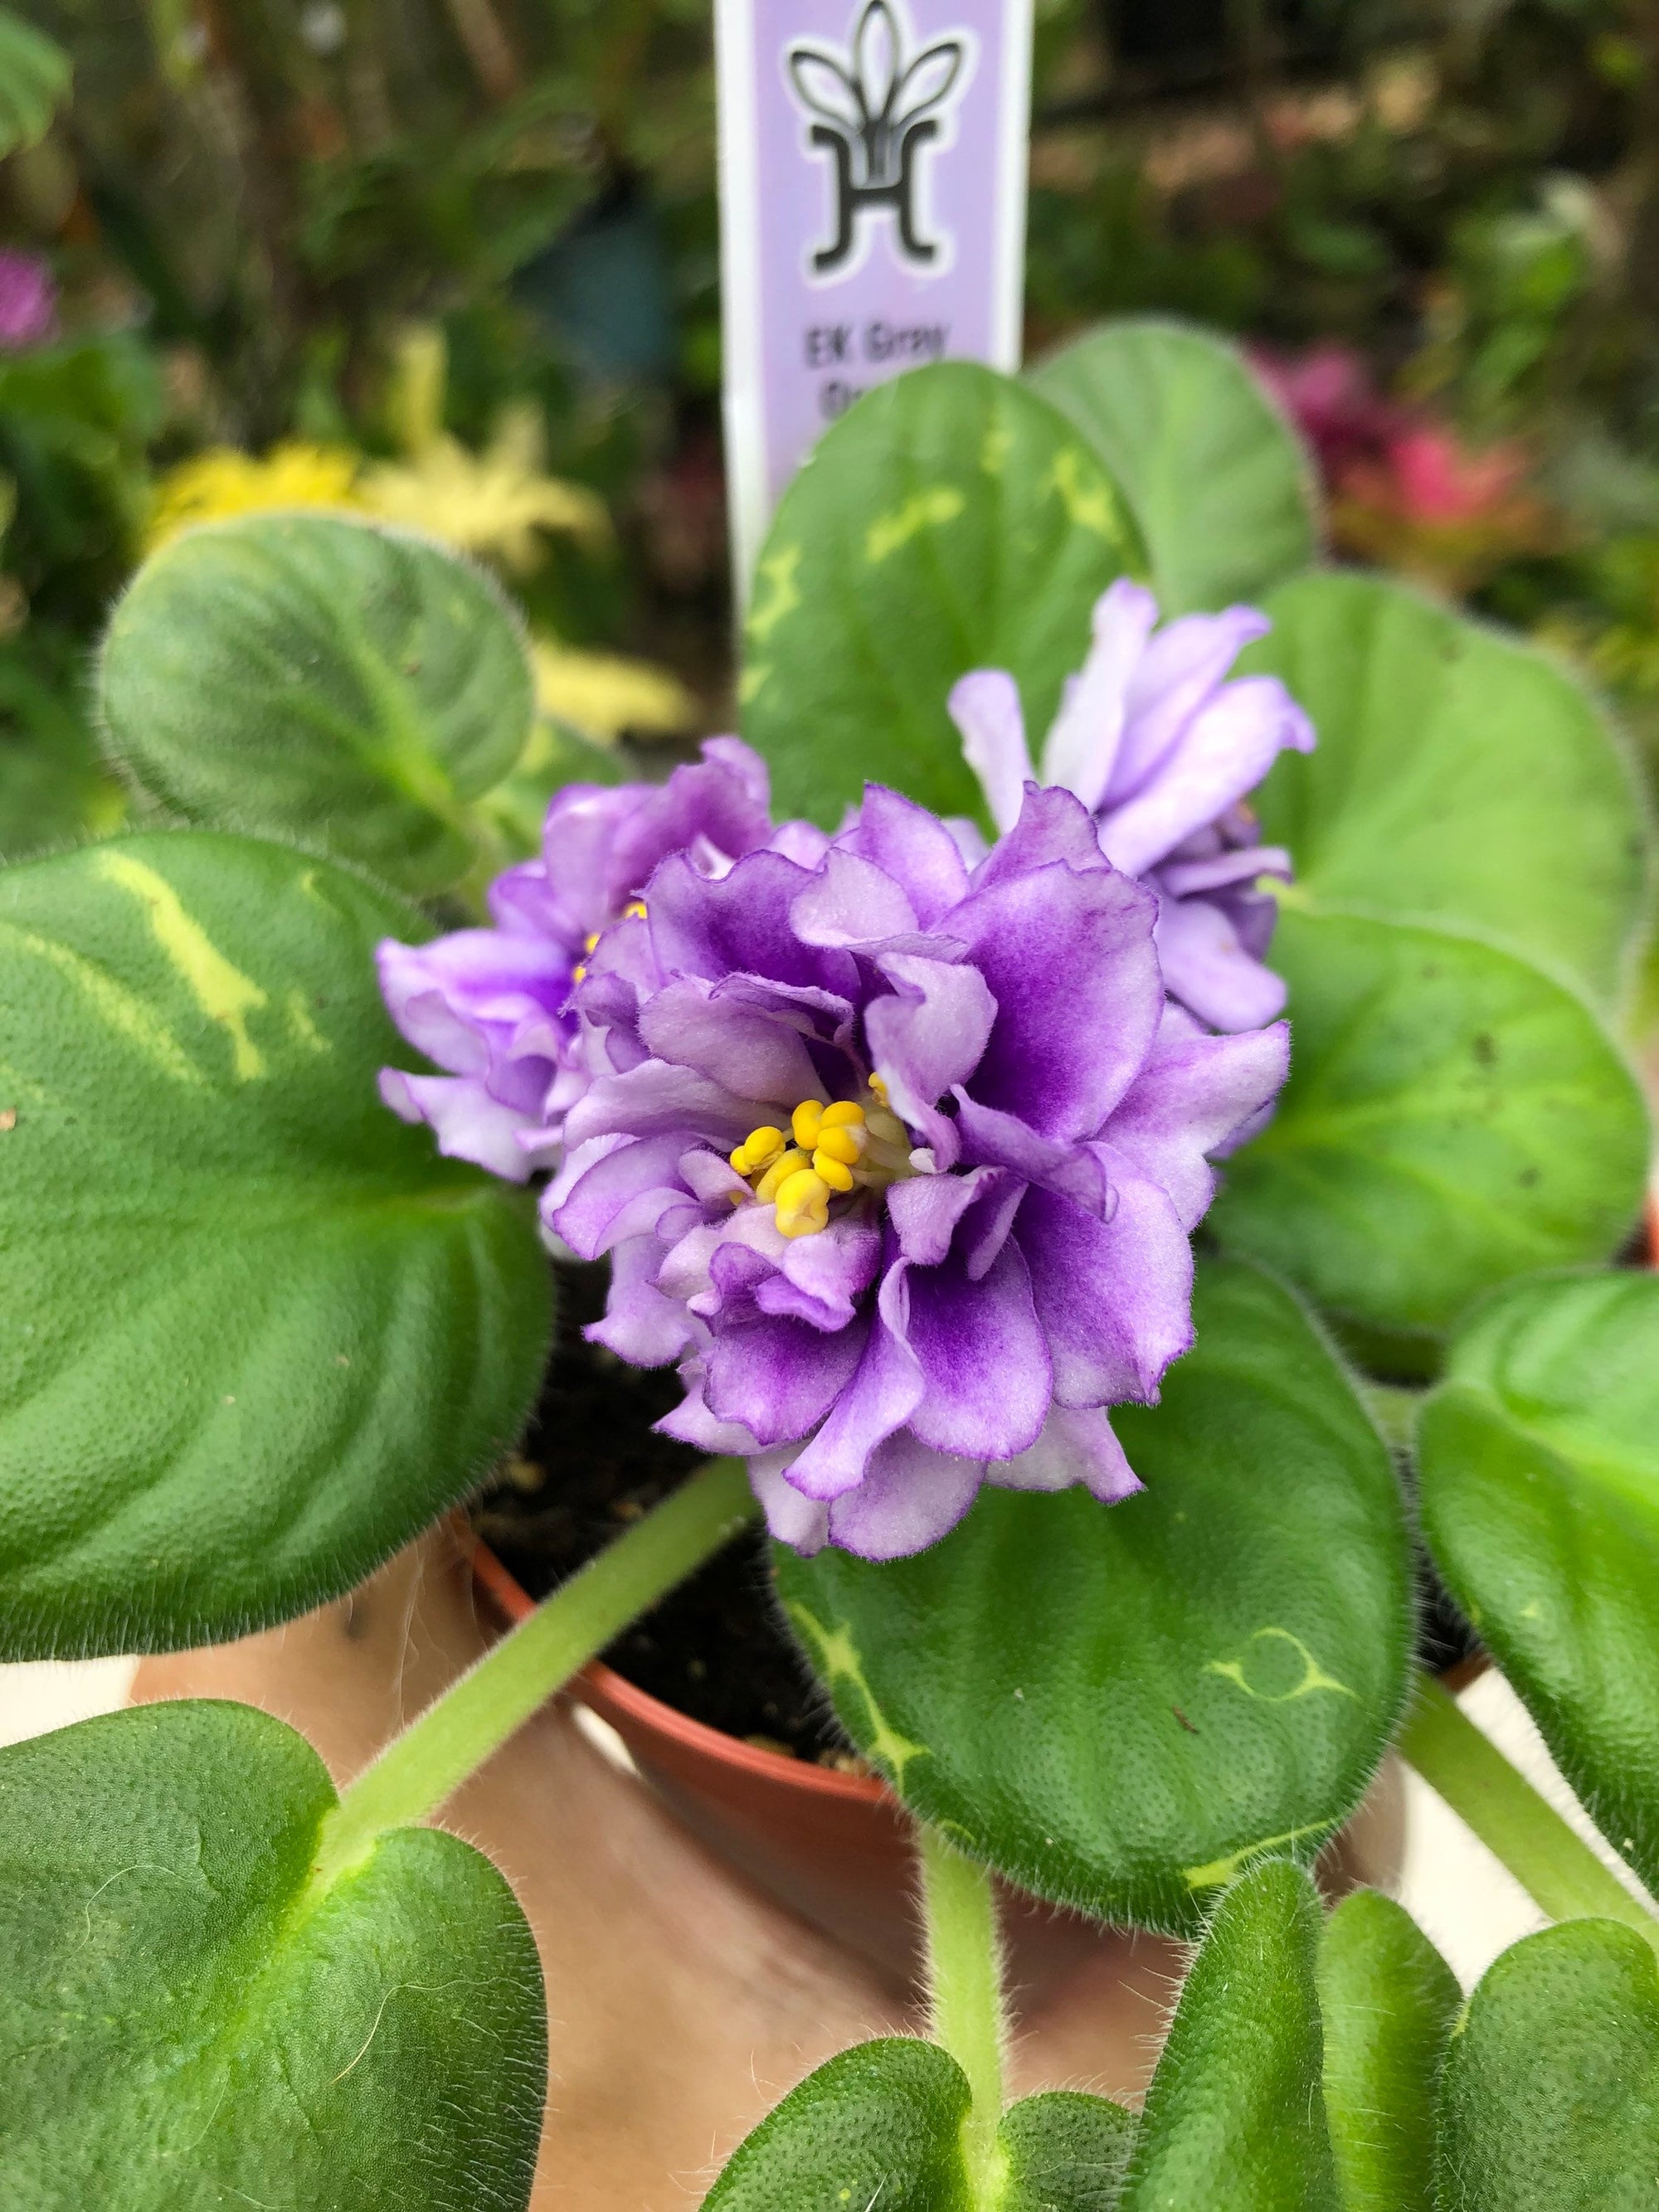 Live house plant African Violet Ruffled Harmony’s ‘EK Gray Ocean’ variegated purple garden 4” flower Potted gift